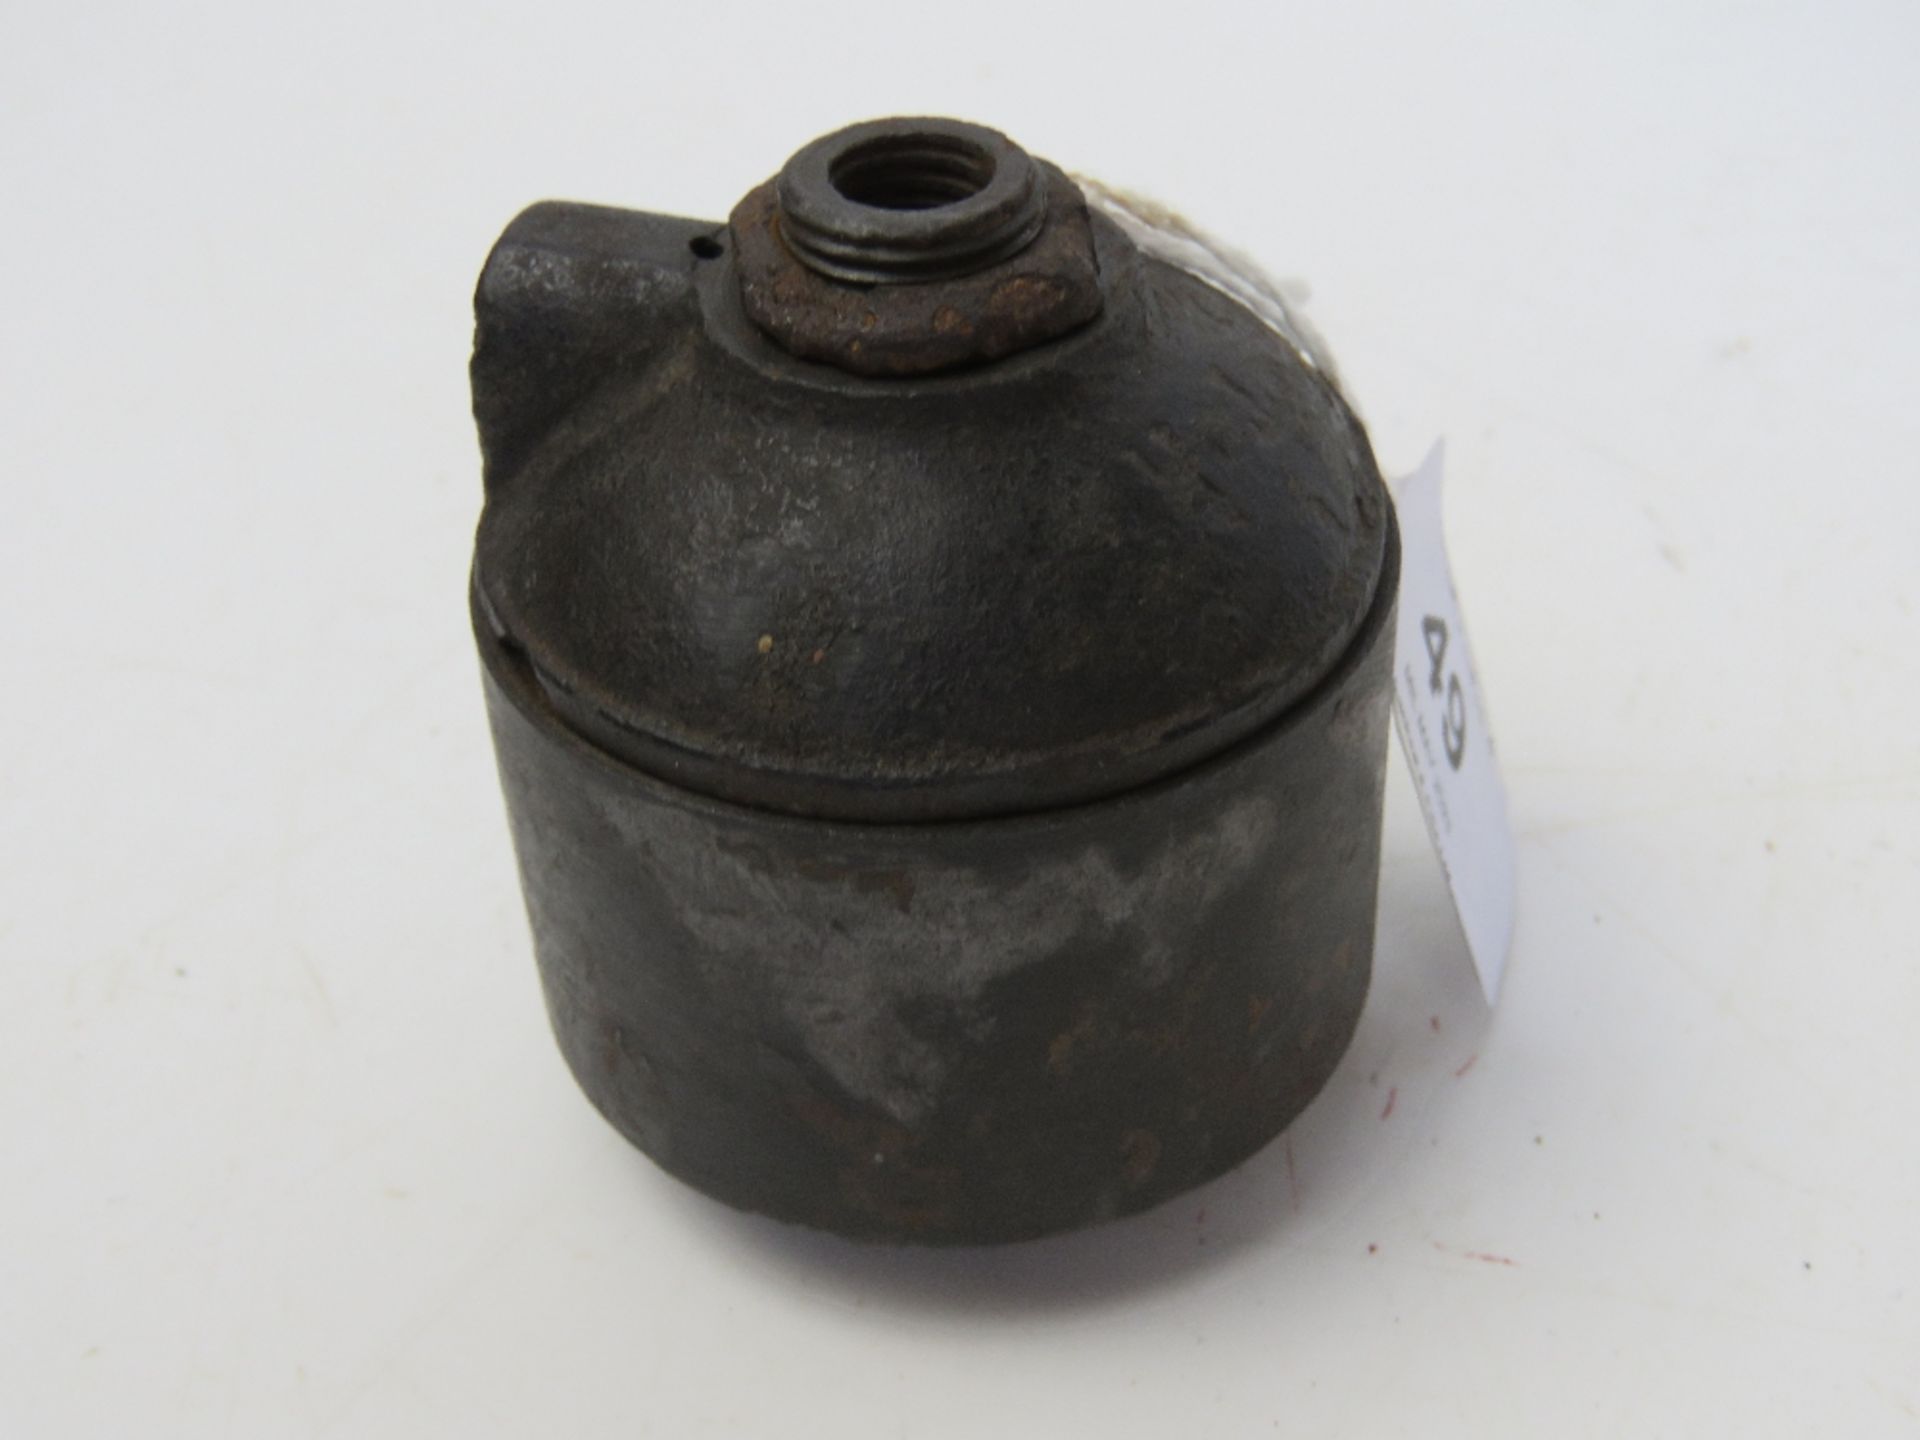 An inert WWI Ink Pot German grenade, bearing T.R markings on top, comes apart.